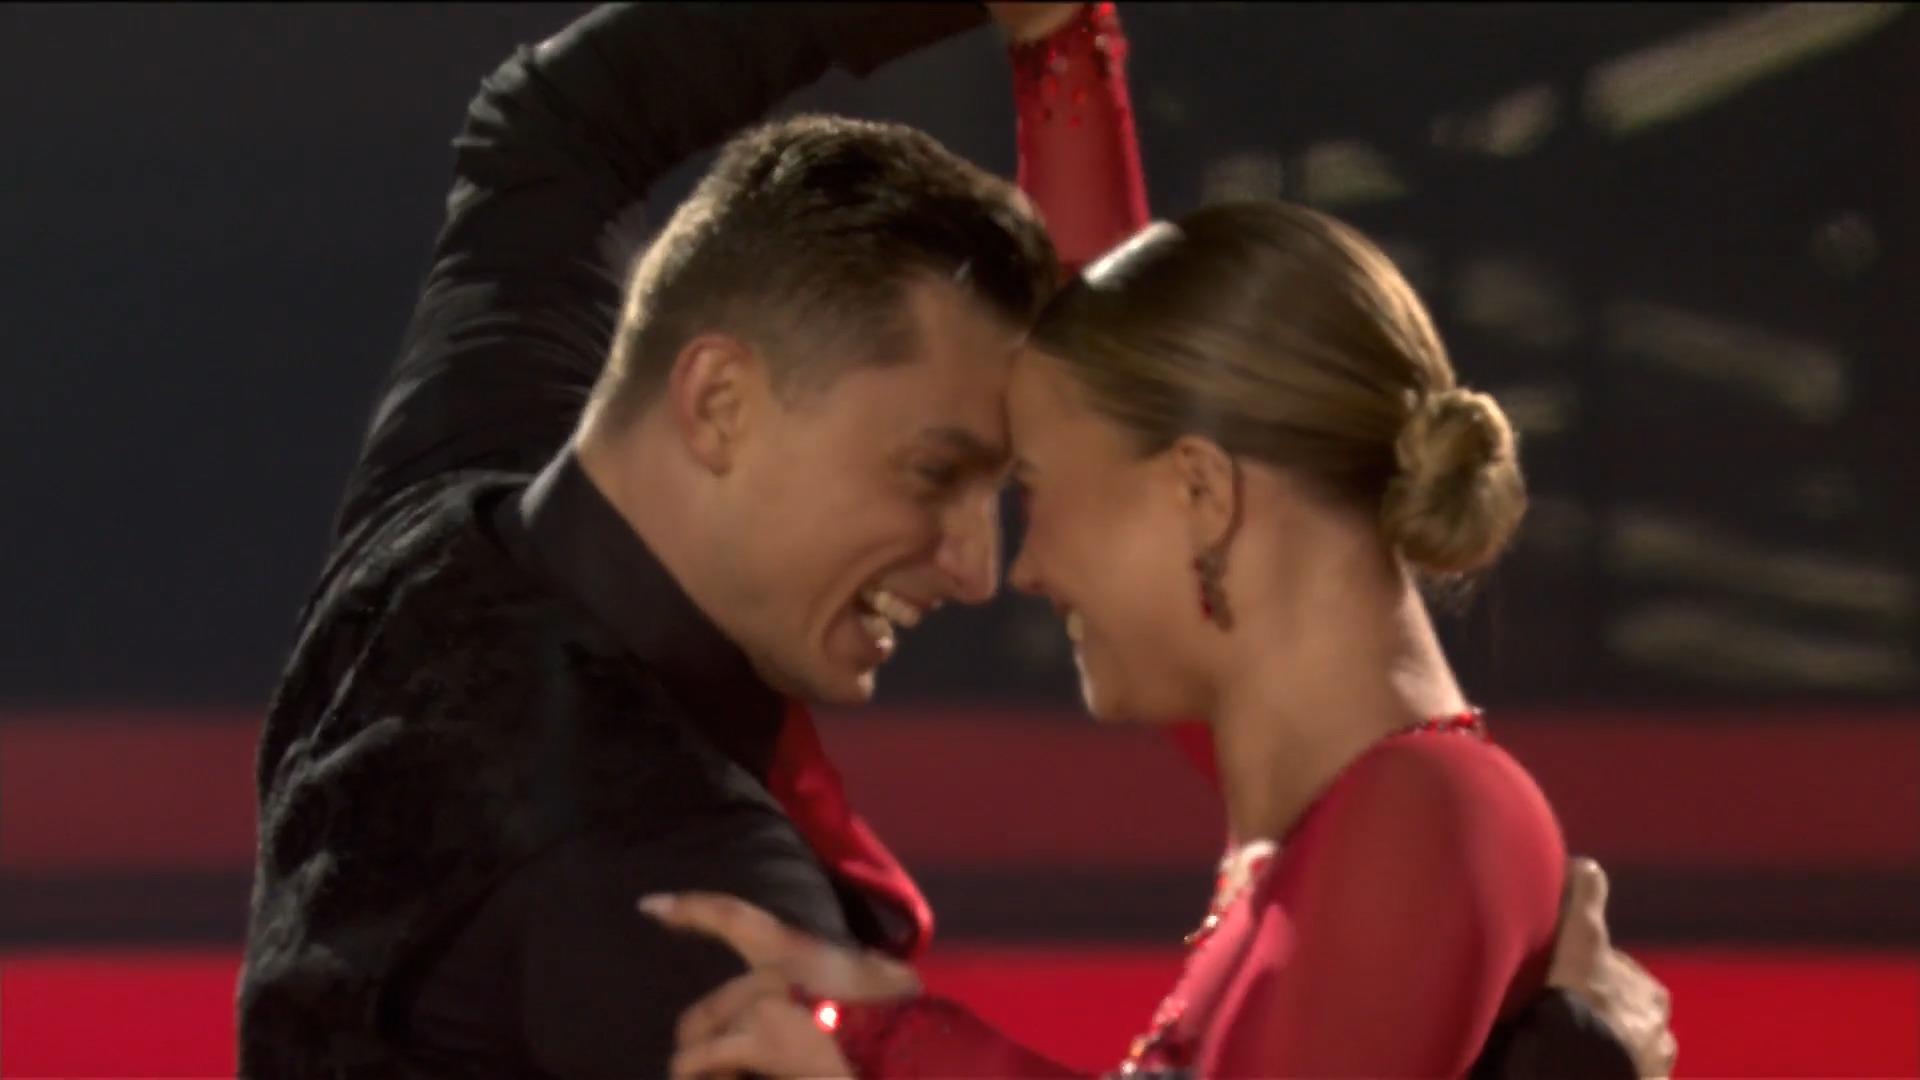 27 puntos para Julia Beautx y Zsolt Sándor Cseke Let's Dance: Passion and Fire in Tango